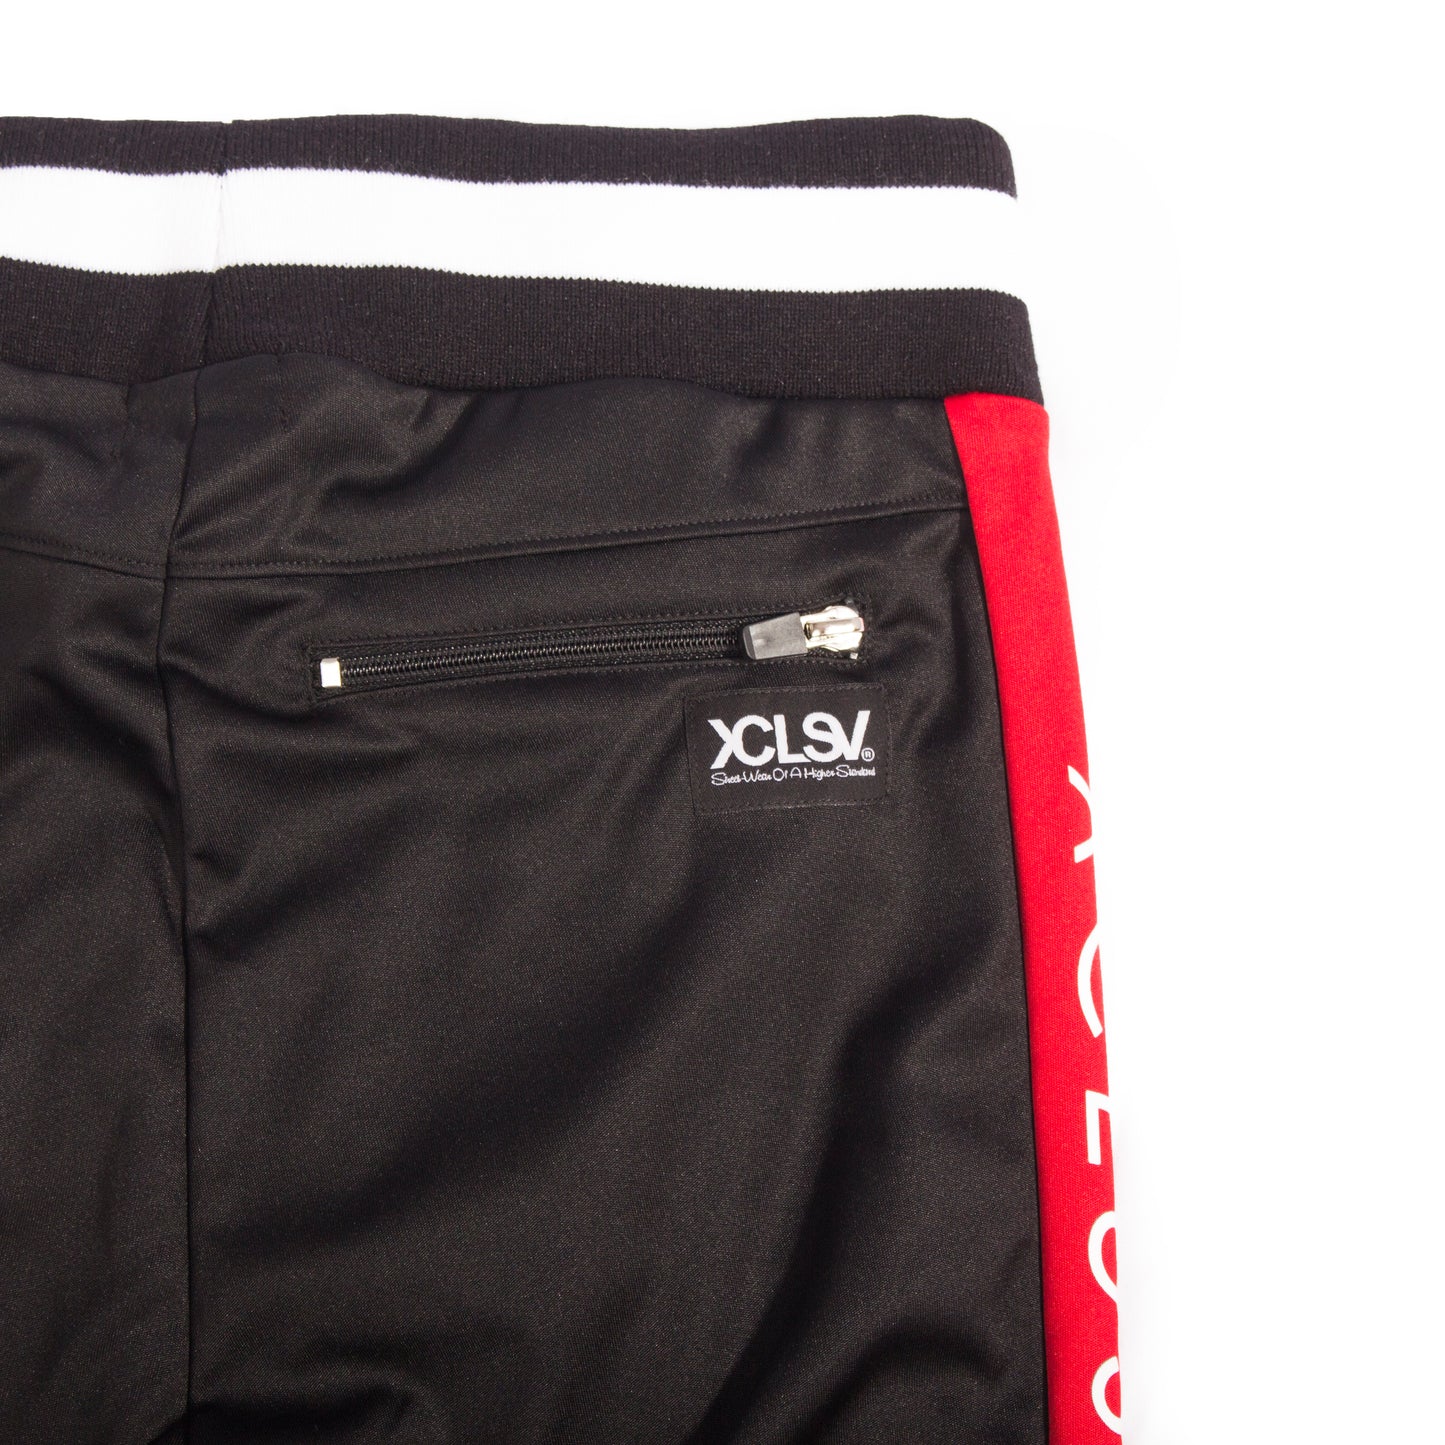 XCLUSIV BLACK TRACK PANT - Xclusiv Clothing Company